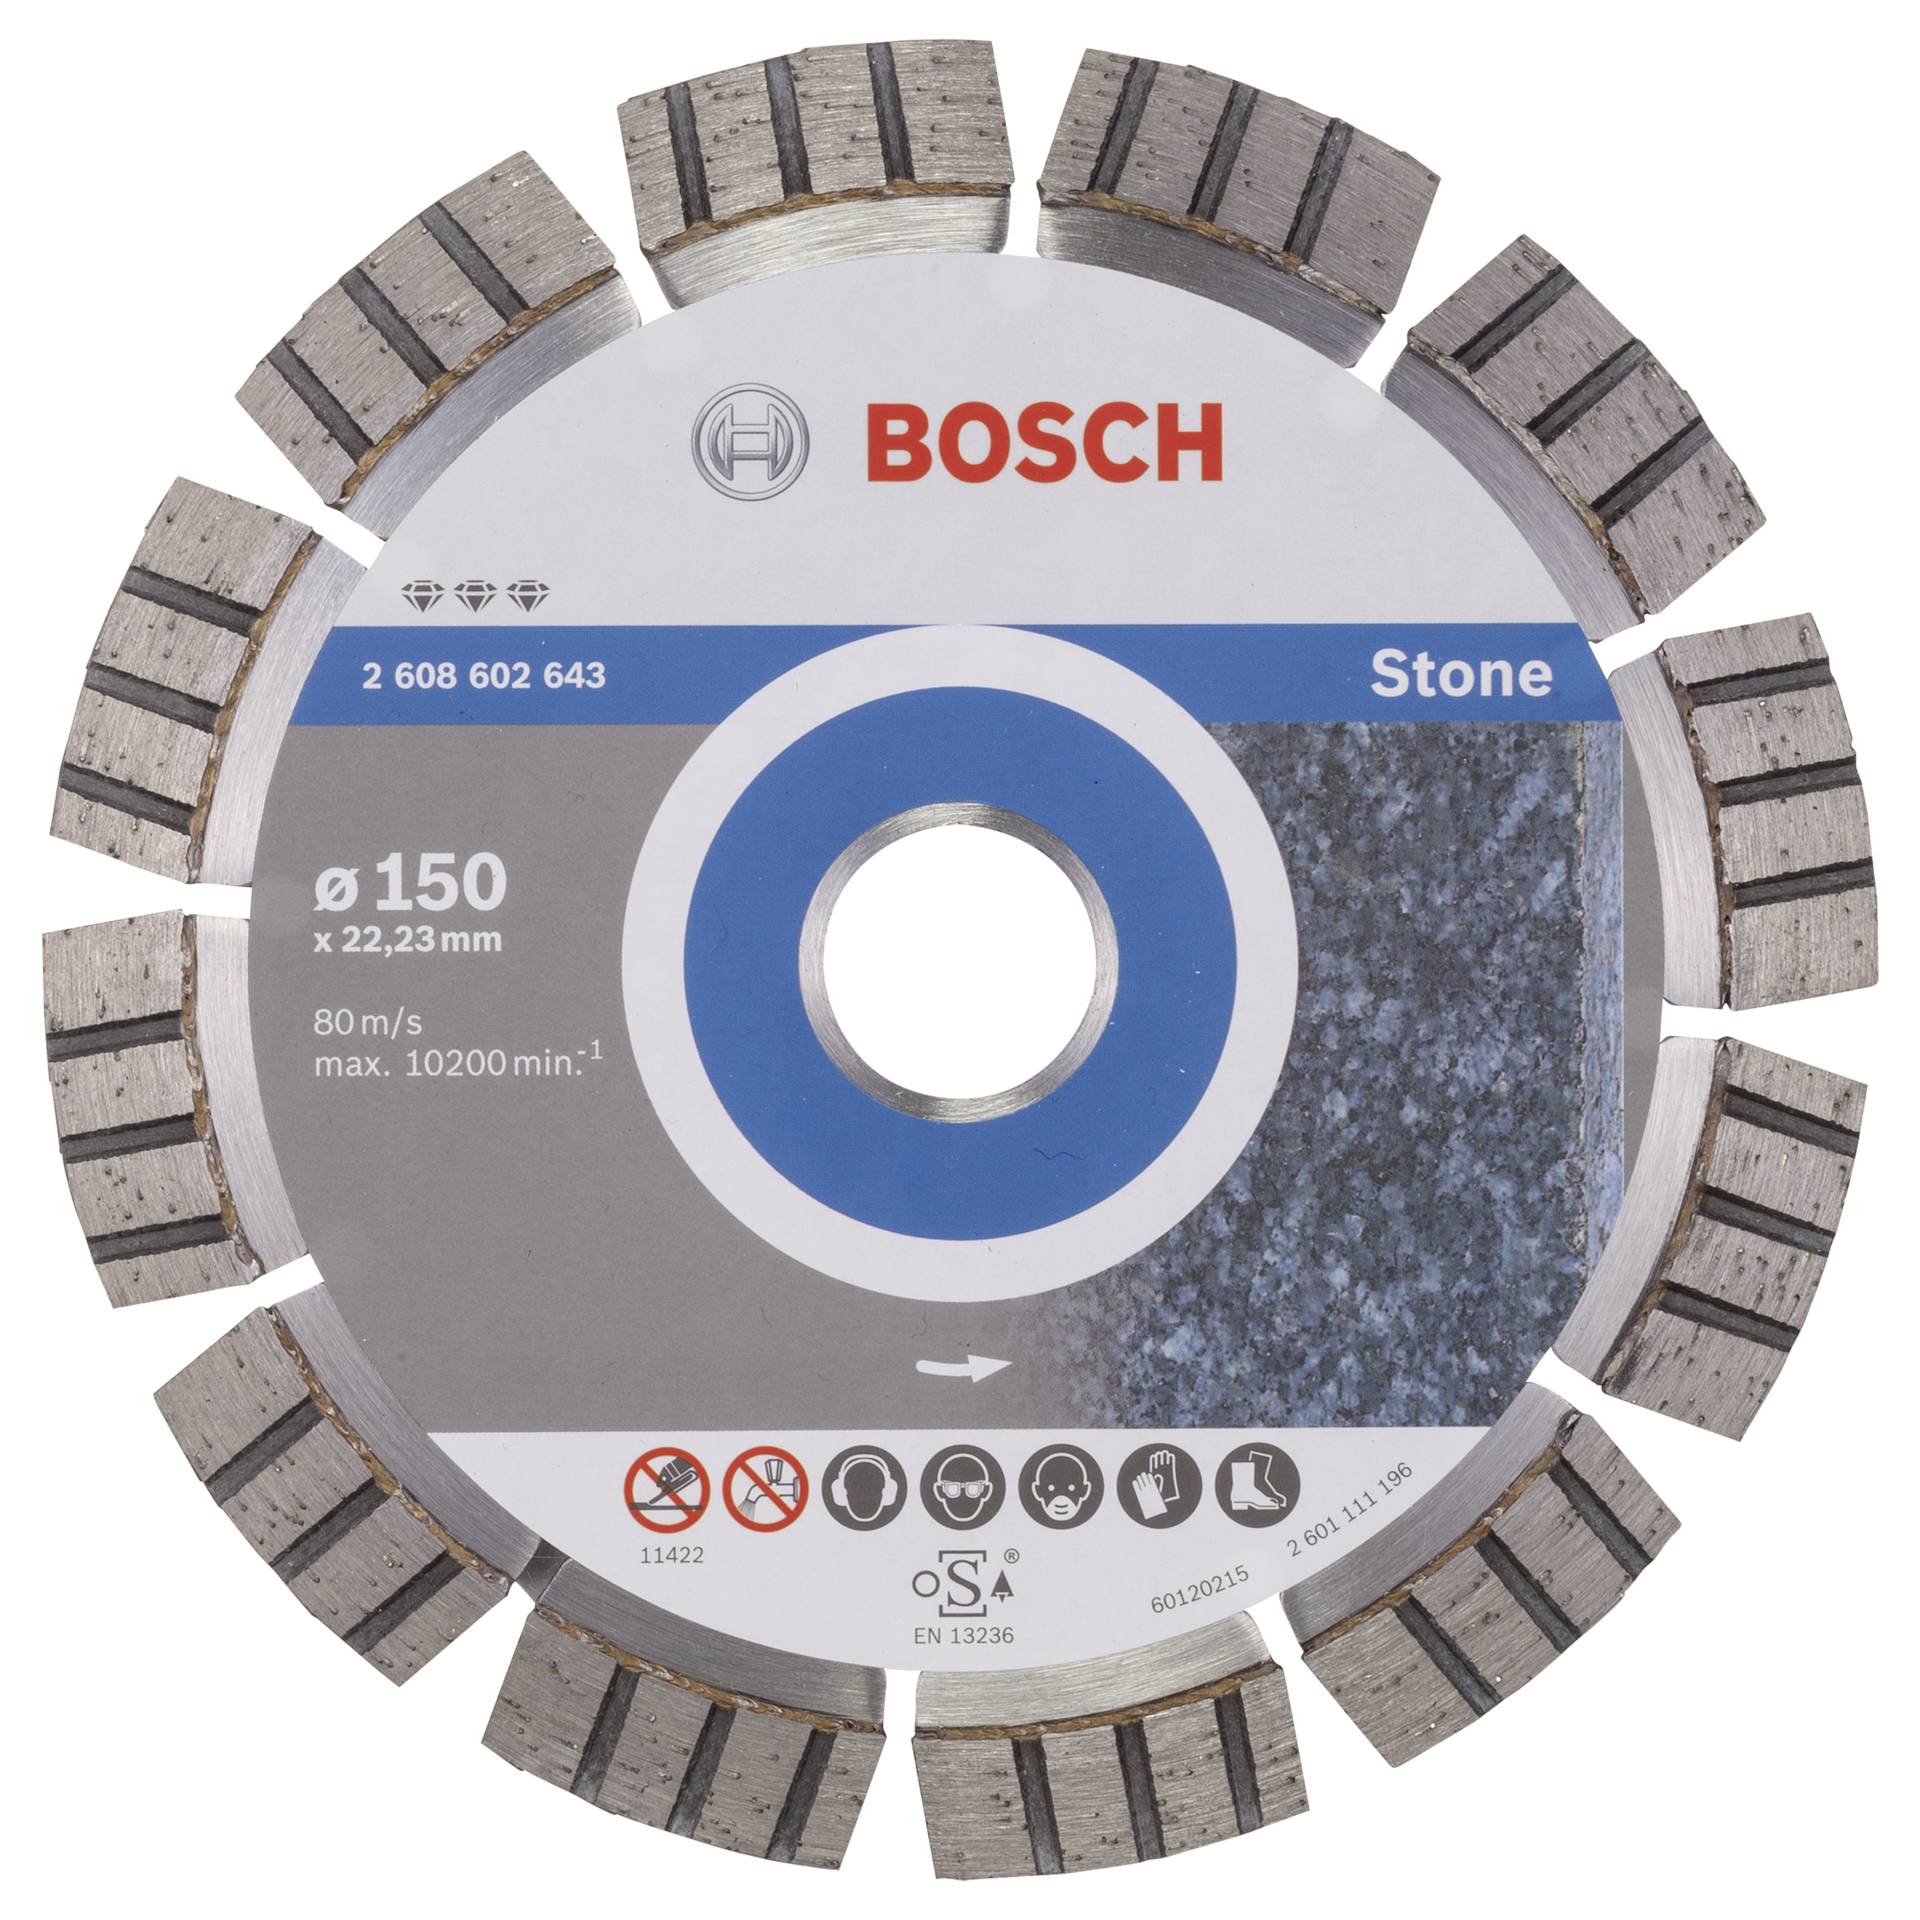 Bosch DIA-TS 150x22,23 Best Stone